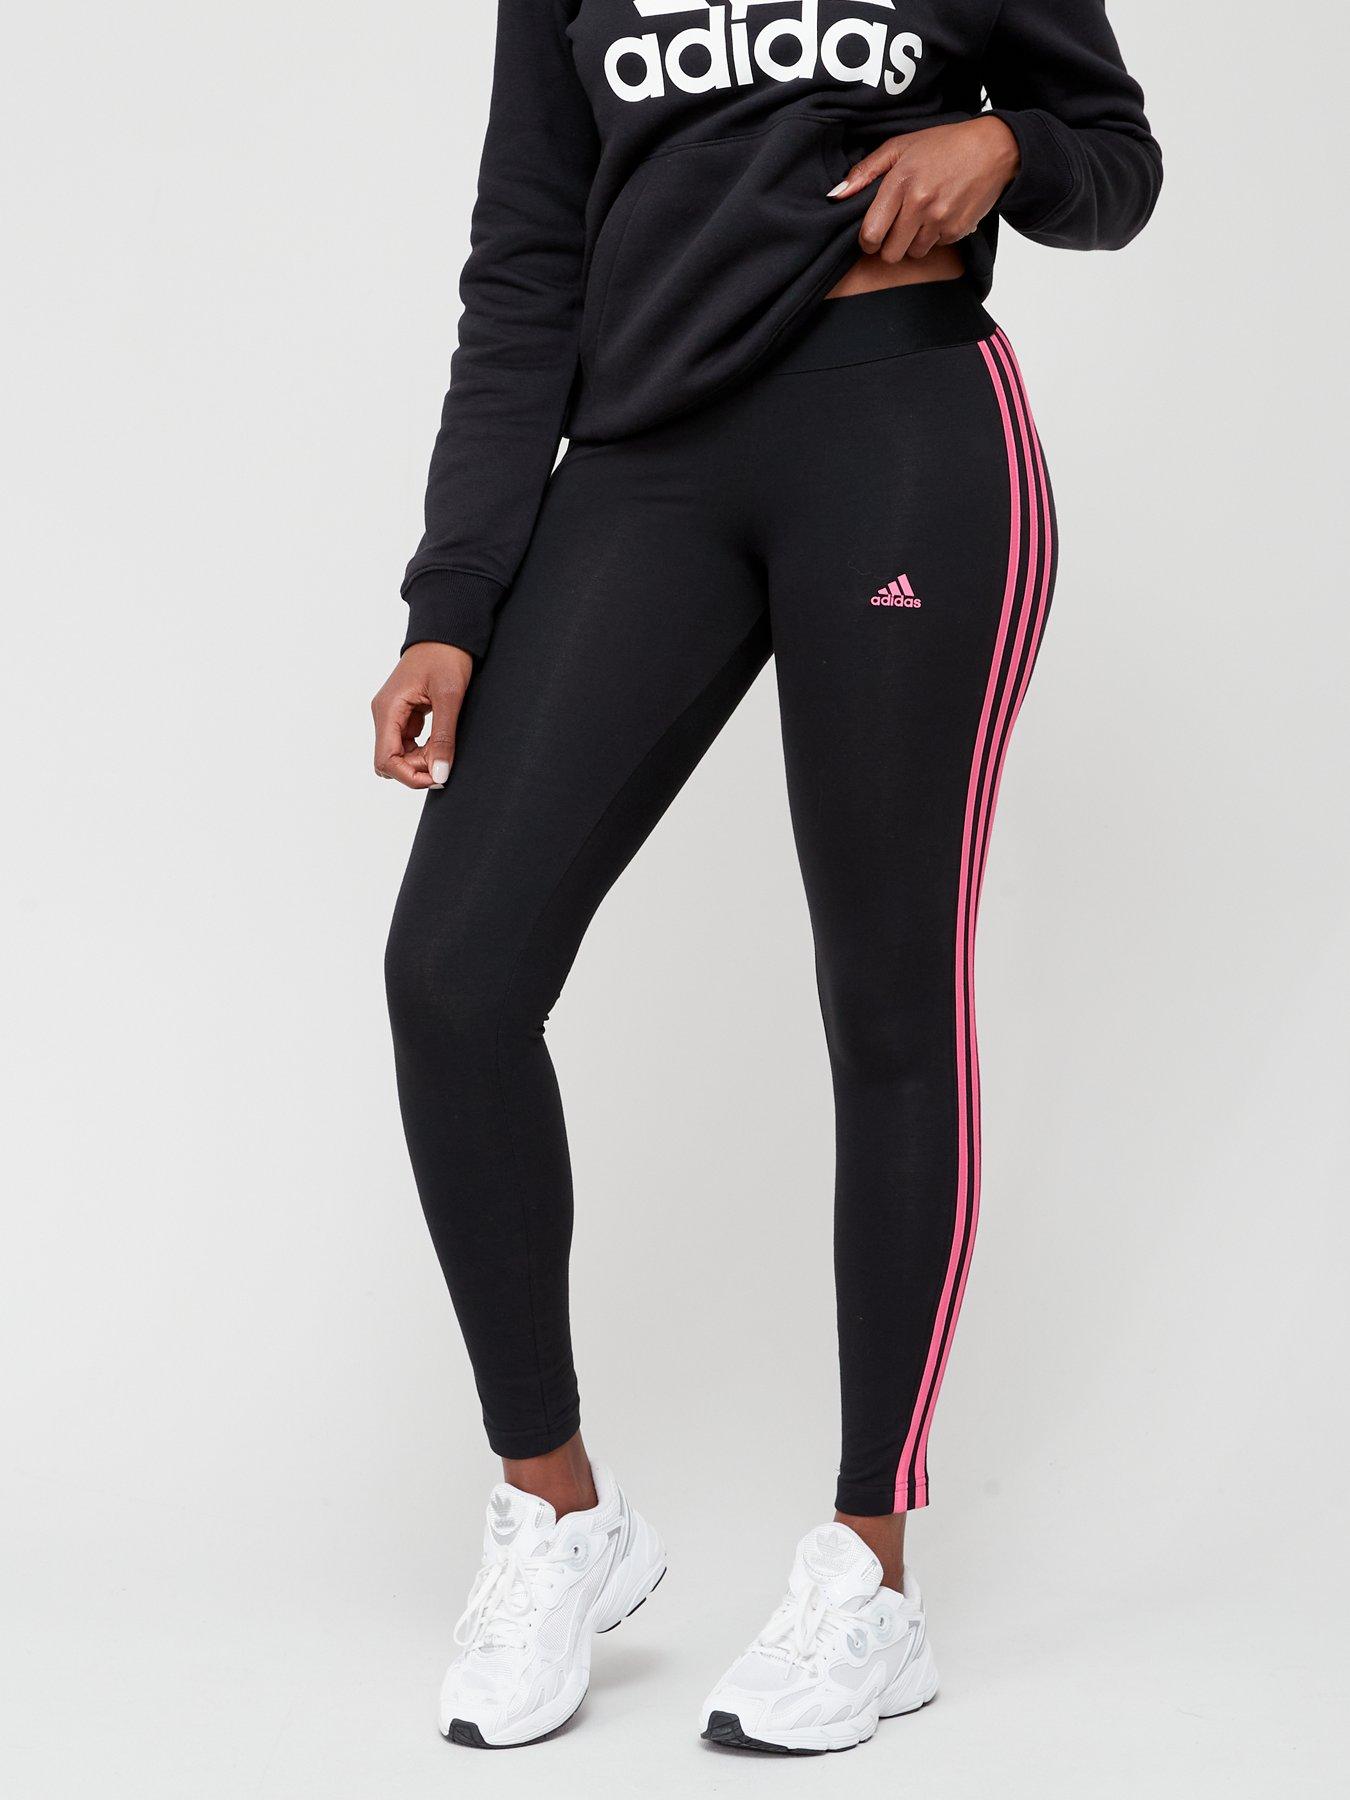 Adidas woman classic 3 stripes leggings, Women's Fashion, Activewear on  Carousell